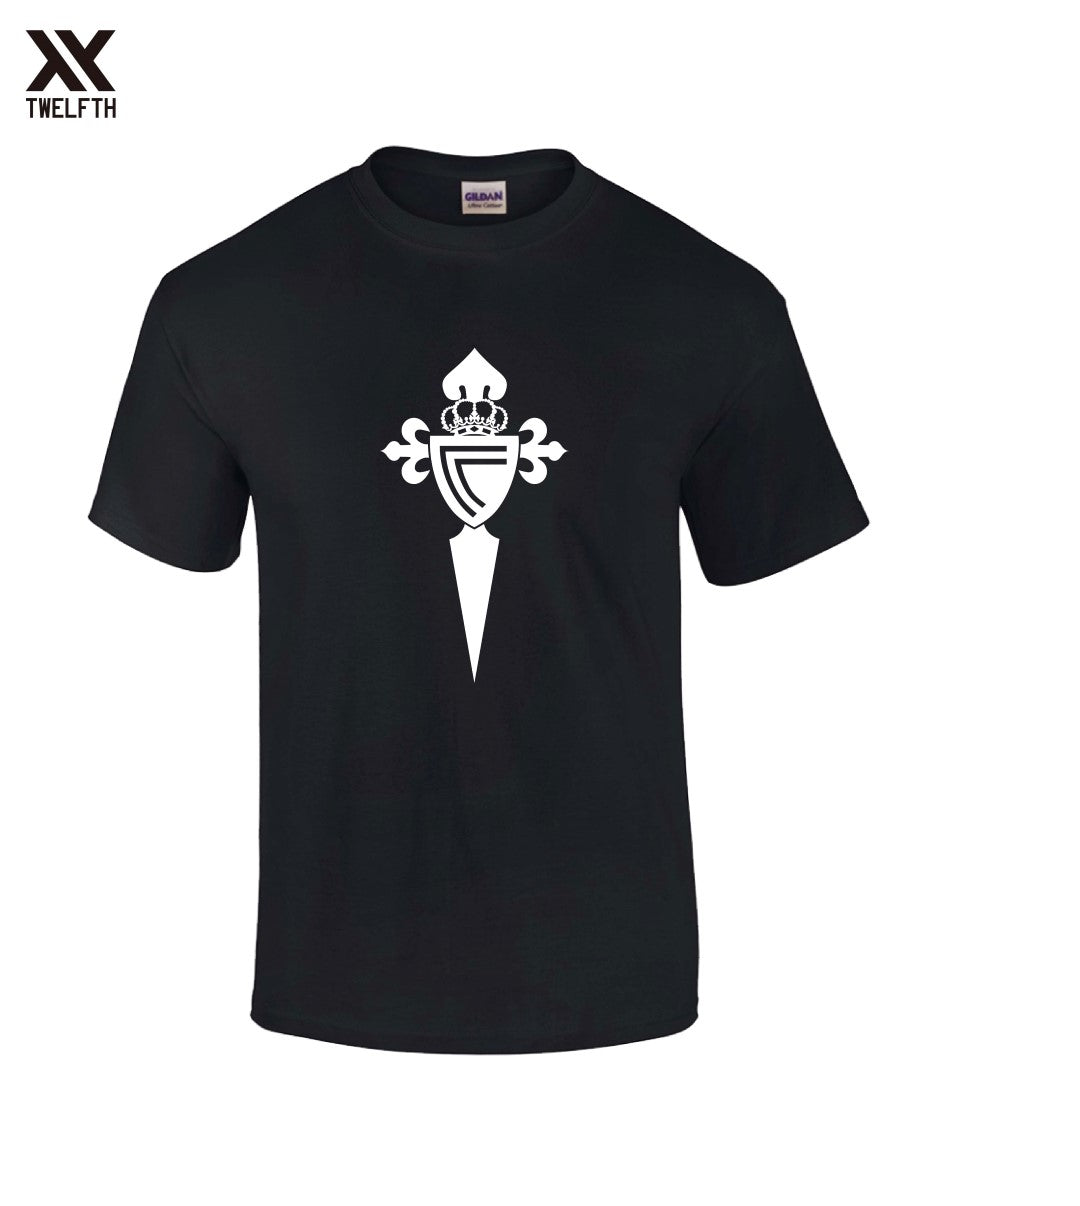 Celta Crest T-Shirt - Mens